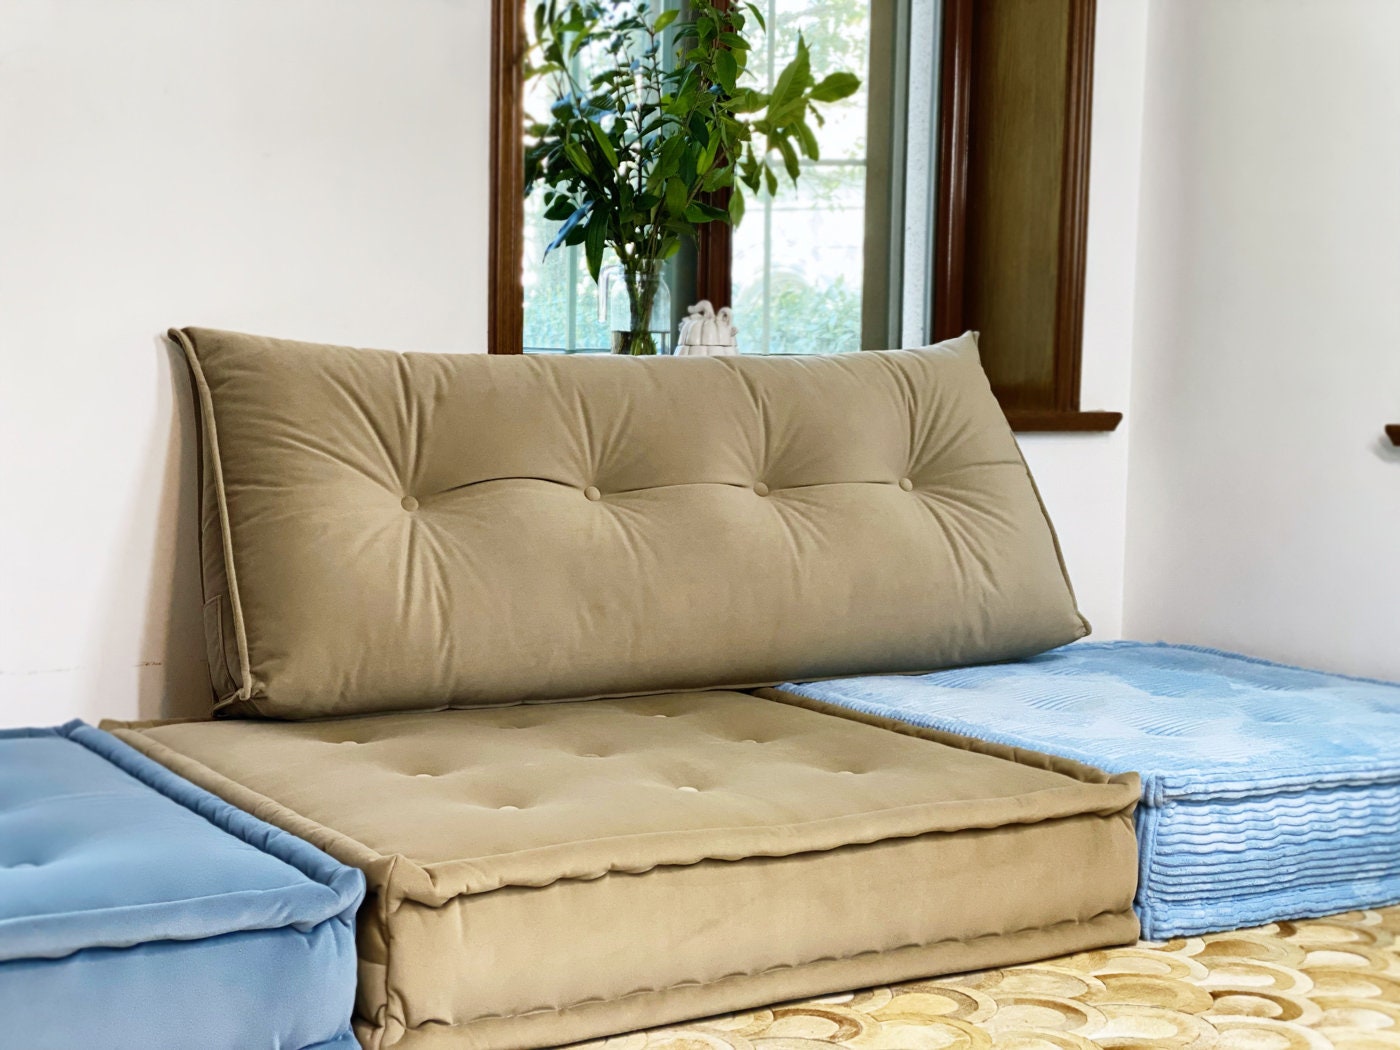 Buy Wholesale China Triangular Cushion Bed Head Pillow Large Back Sofa  Tatami Waist Cushion Bed Neck Pillow Sofa Cushion & Sofa Cushion at USD 6.2